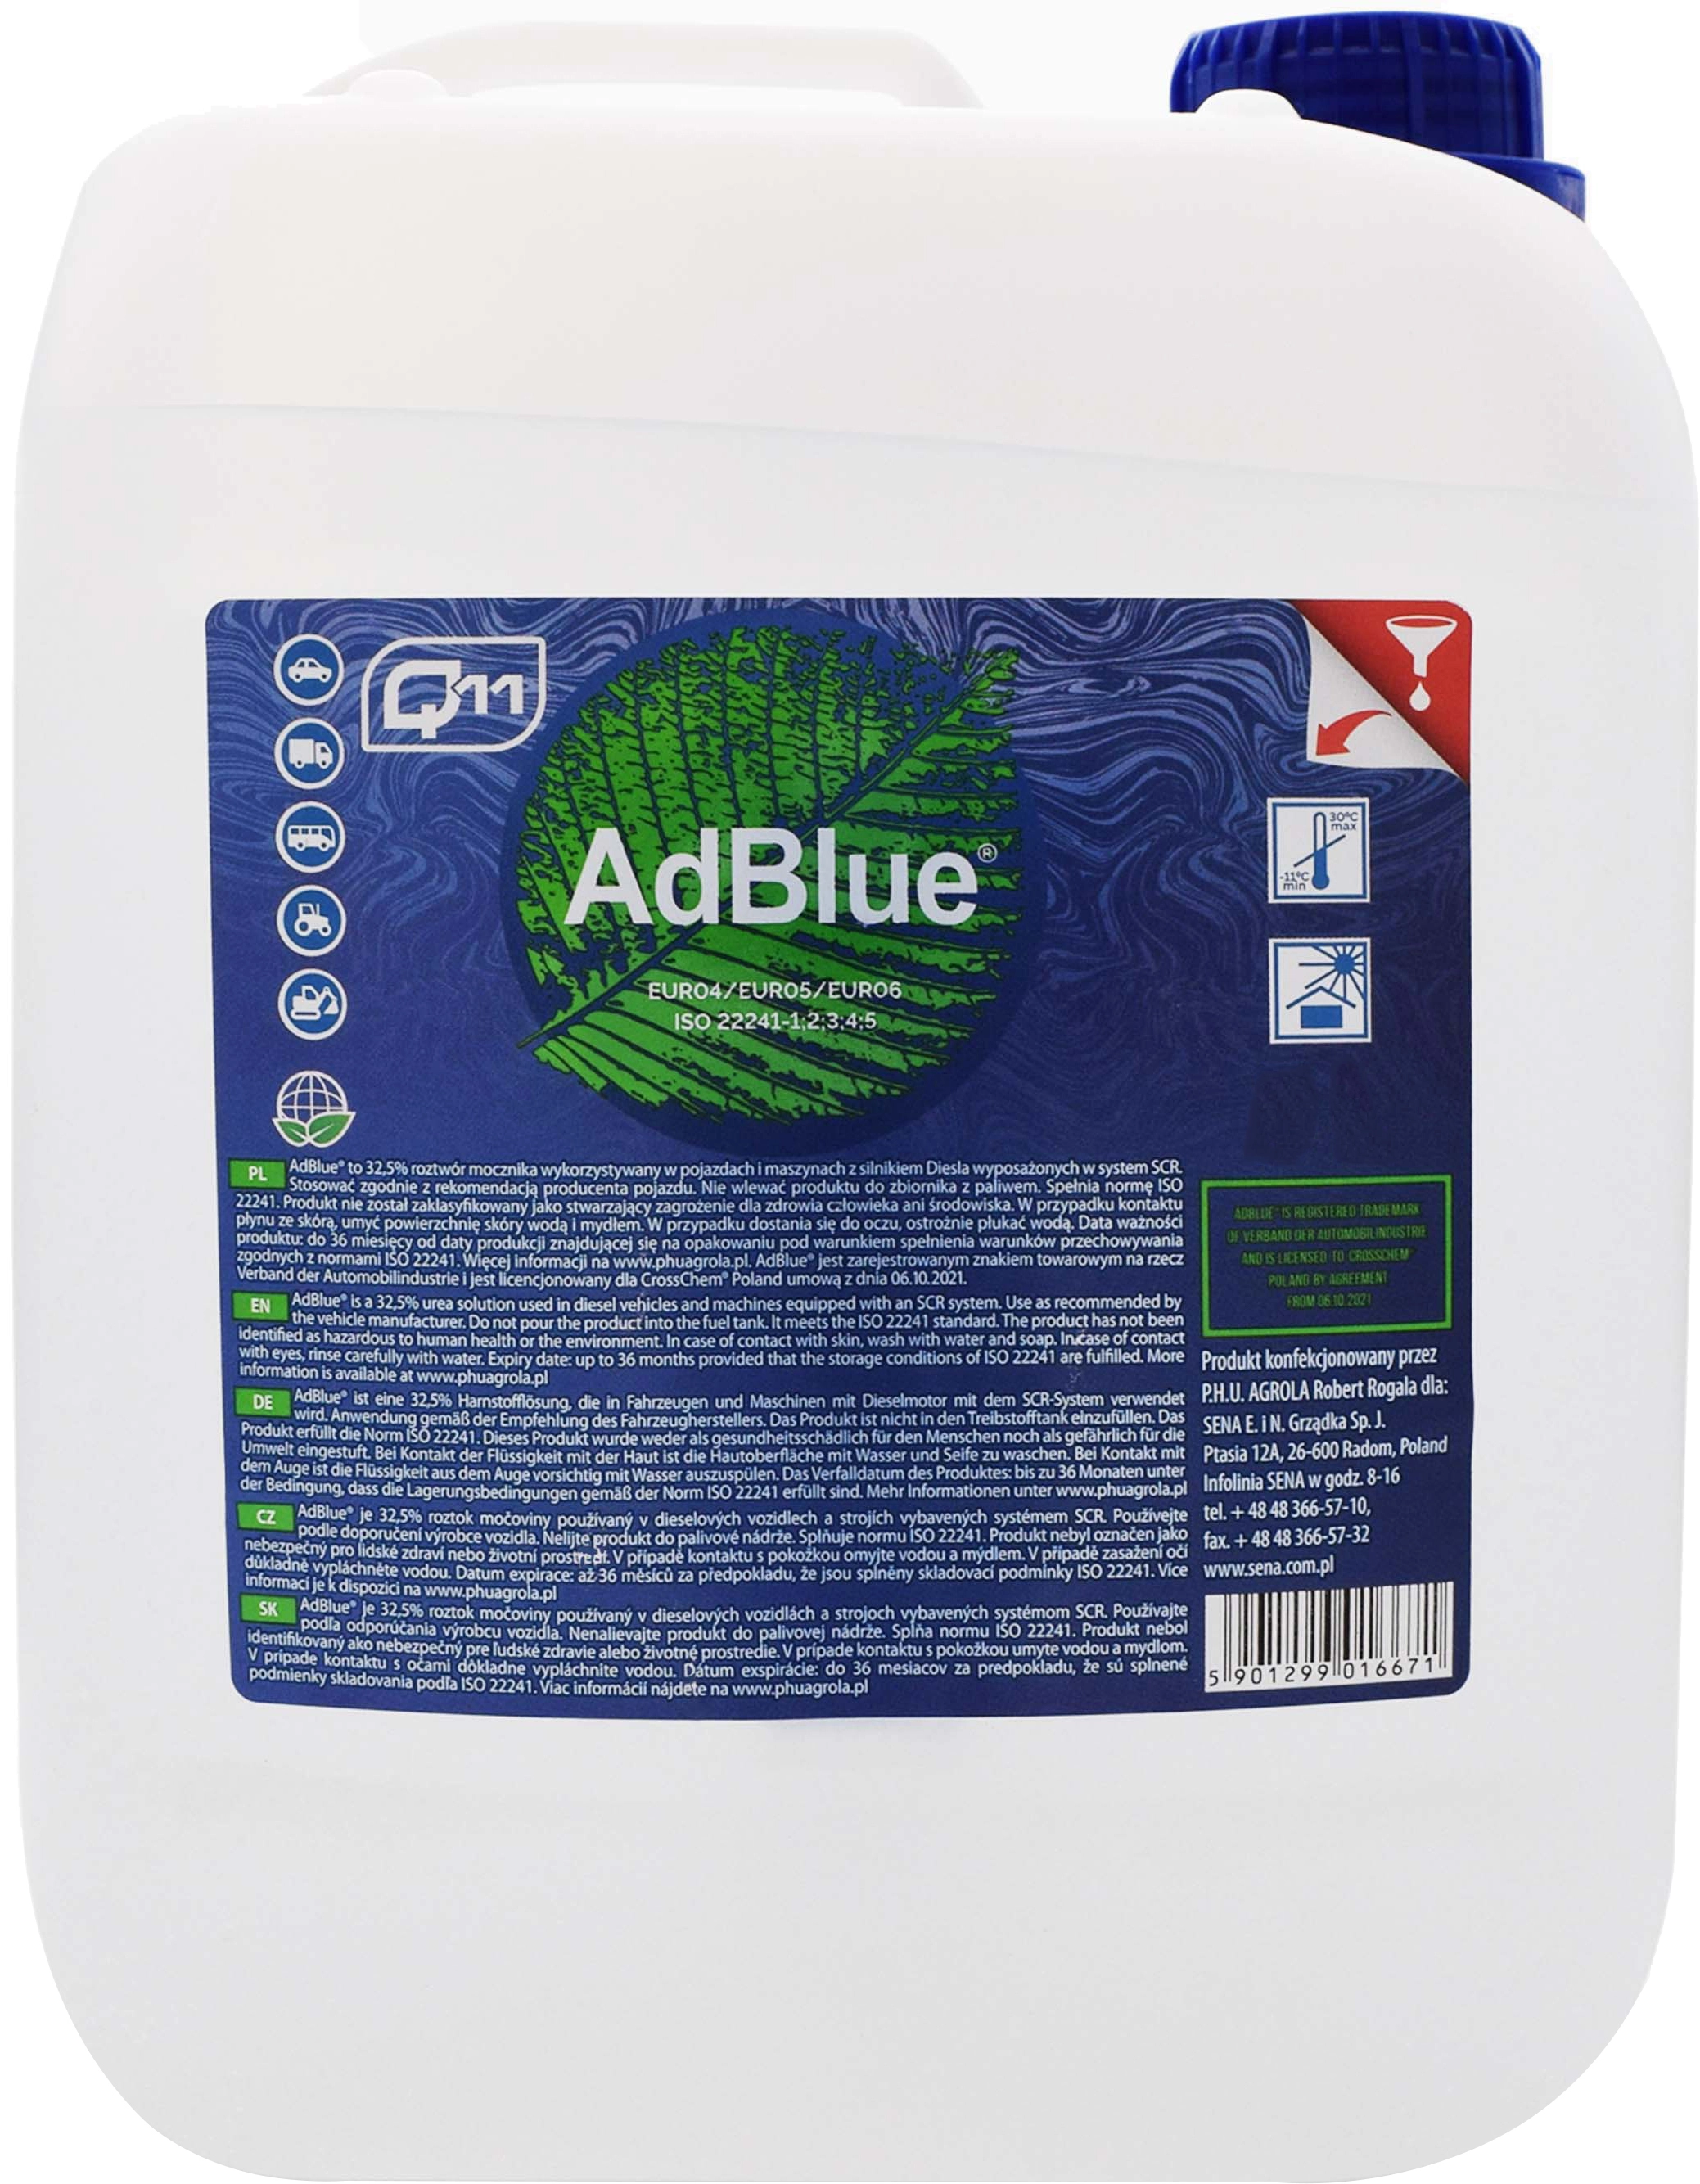 Harnstofflösung AdBlue® ROBBYROB